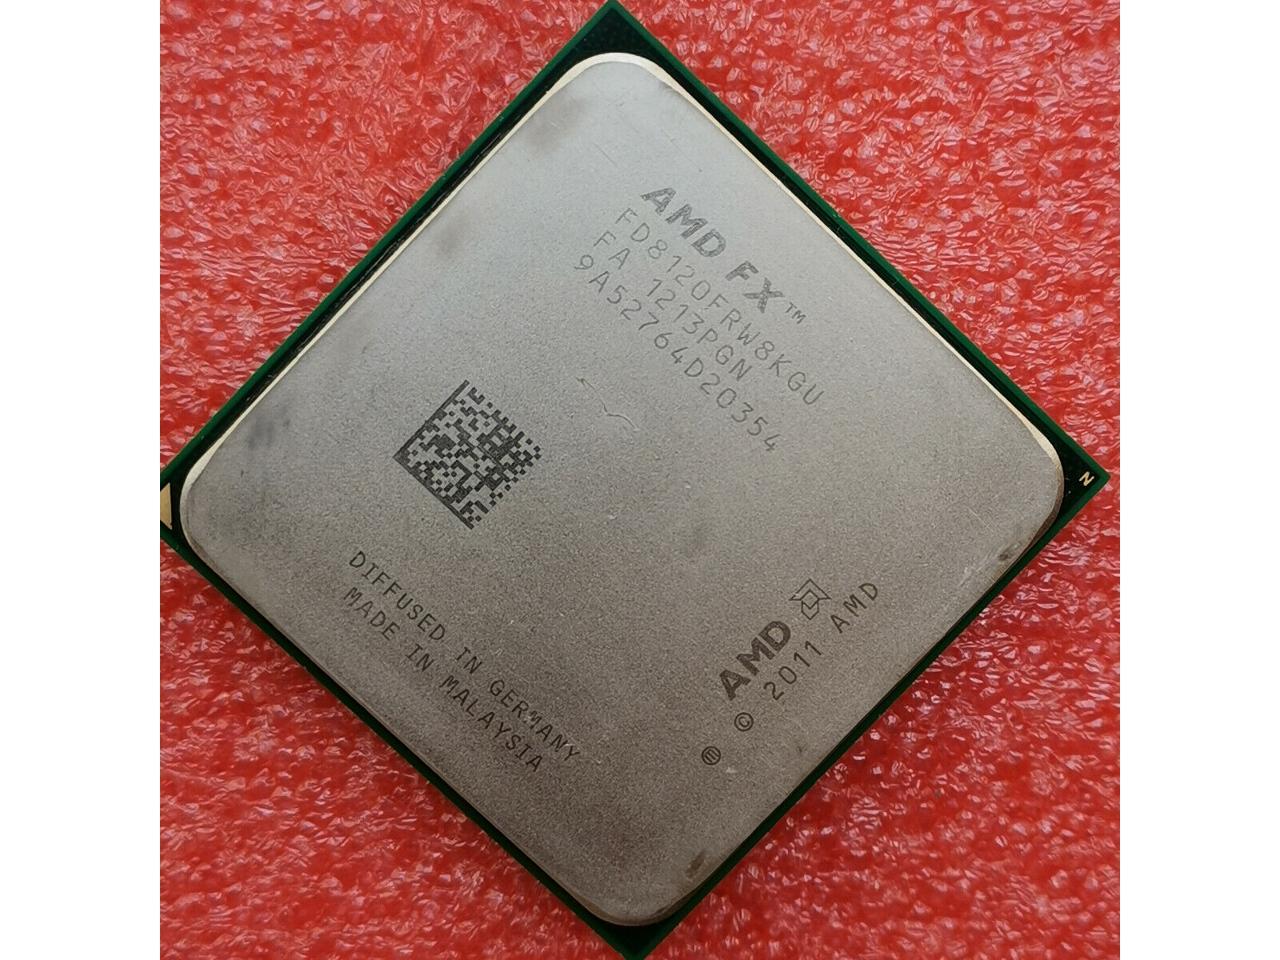 AMD FX-8120 Zambezi 8-Core 3.1 GHz Socket AM3+ 125W FD8120FRGUBOX Desktop Processor